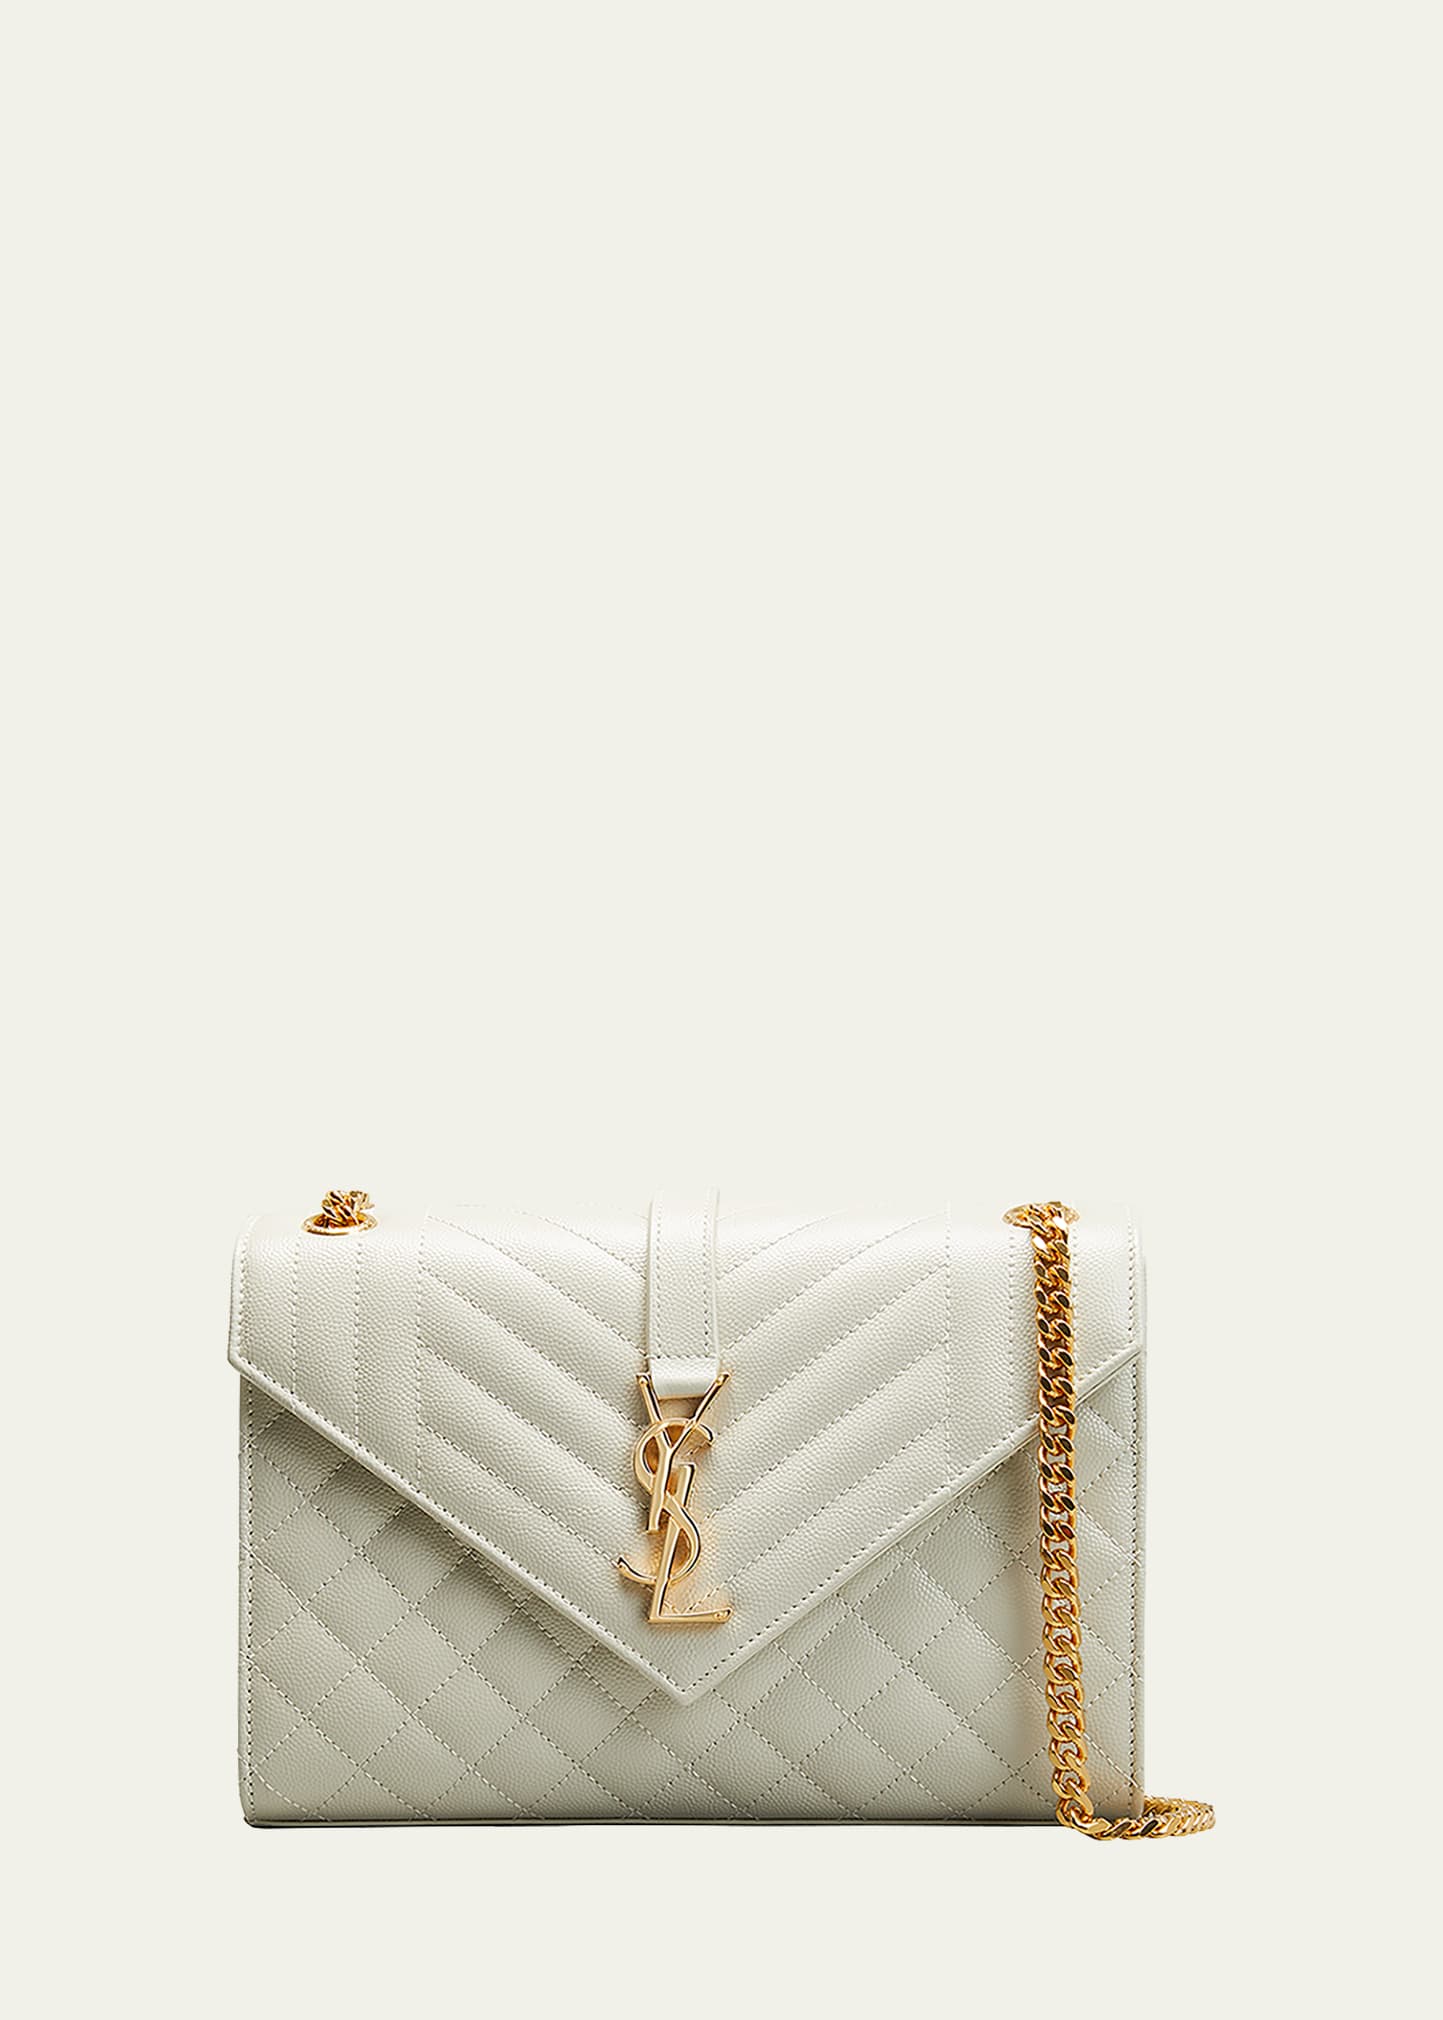 Saint Laurent Medium Tri-quilted Matelasse Grain De Poudre Flap Shoulder Bag, Golden Hardware In White